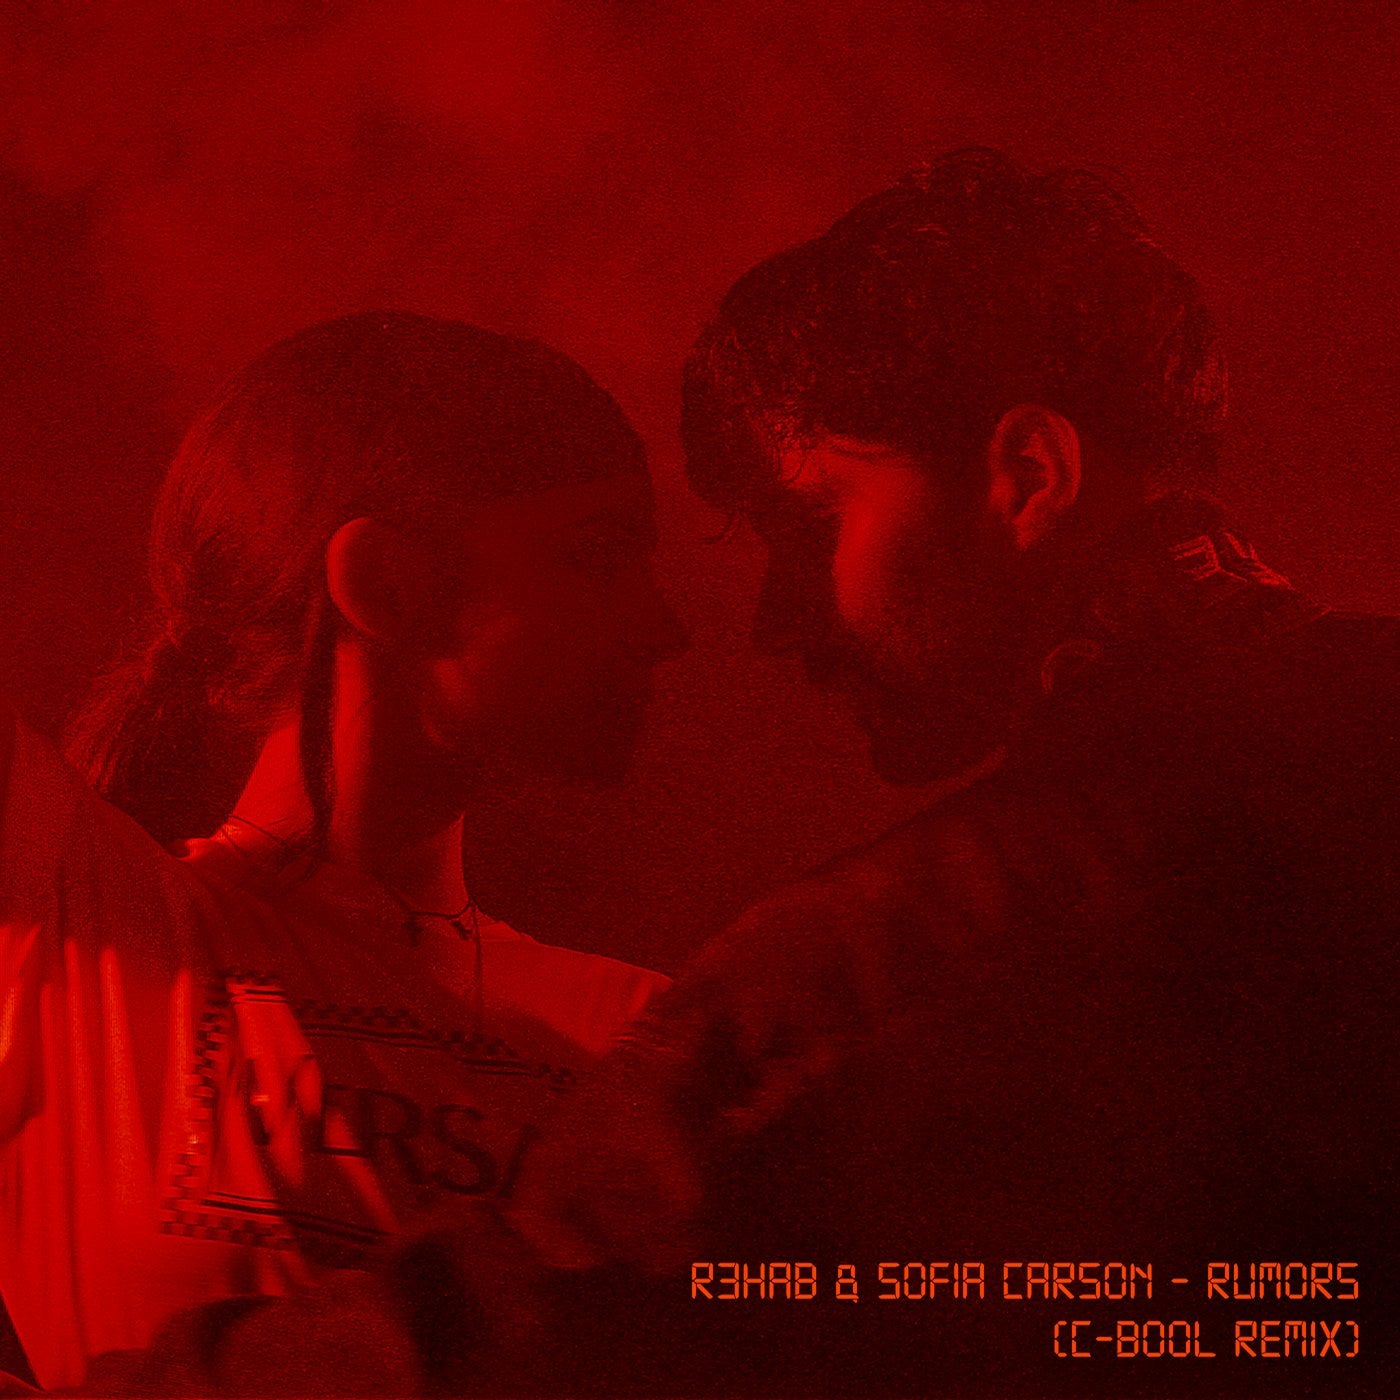 Rumors (C-BooL Remix) feat. Sofia Carson